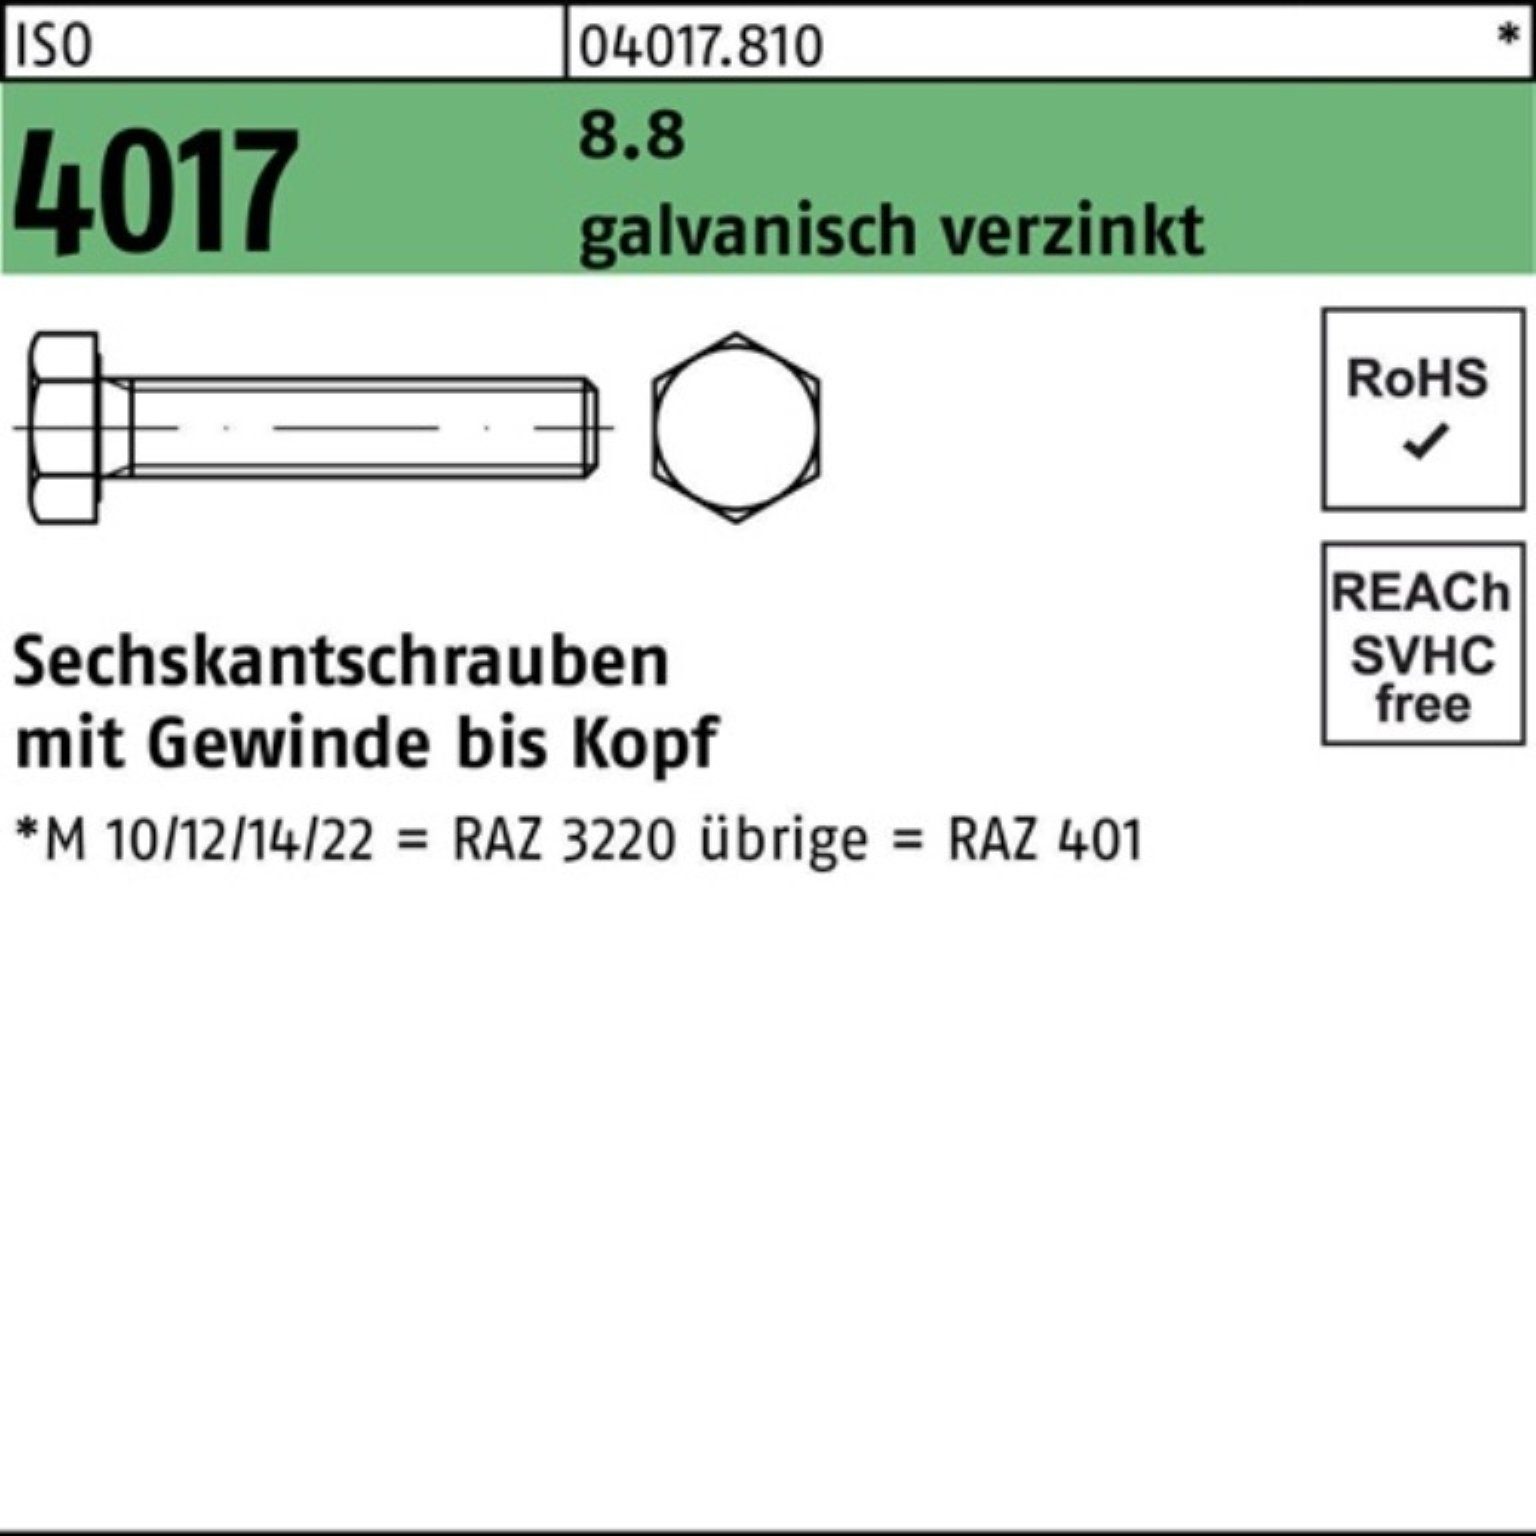 Bufab Sechskantschraube VG 1 100er 4017 Sechskantschraube ISO M39x Pack 110 8.8 galv.verz. St